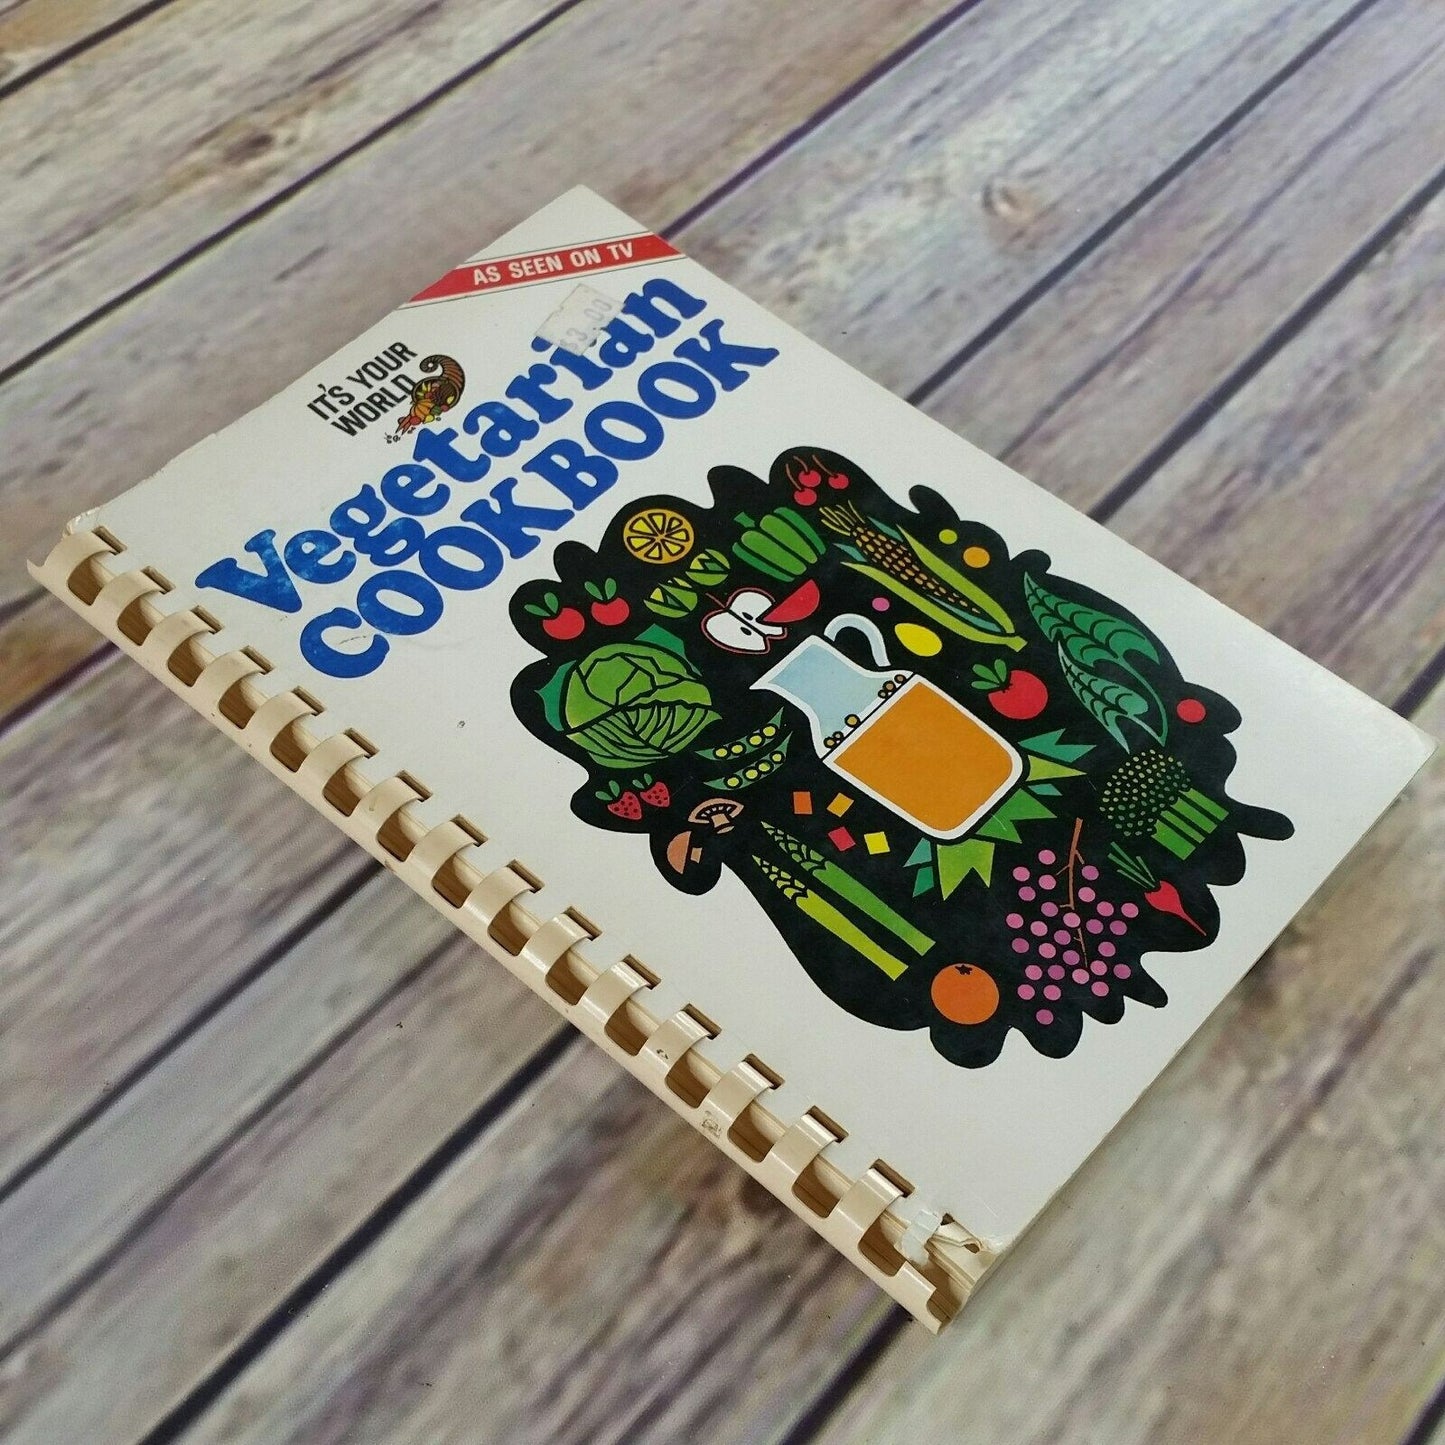 Vintage Cookbook Vegetarian Its Your World 1973 Art Linkletter Seventh Day Adventists Spiral Bound Paperback Television Series